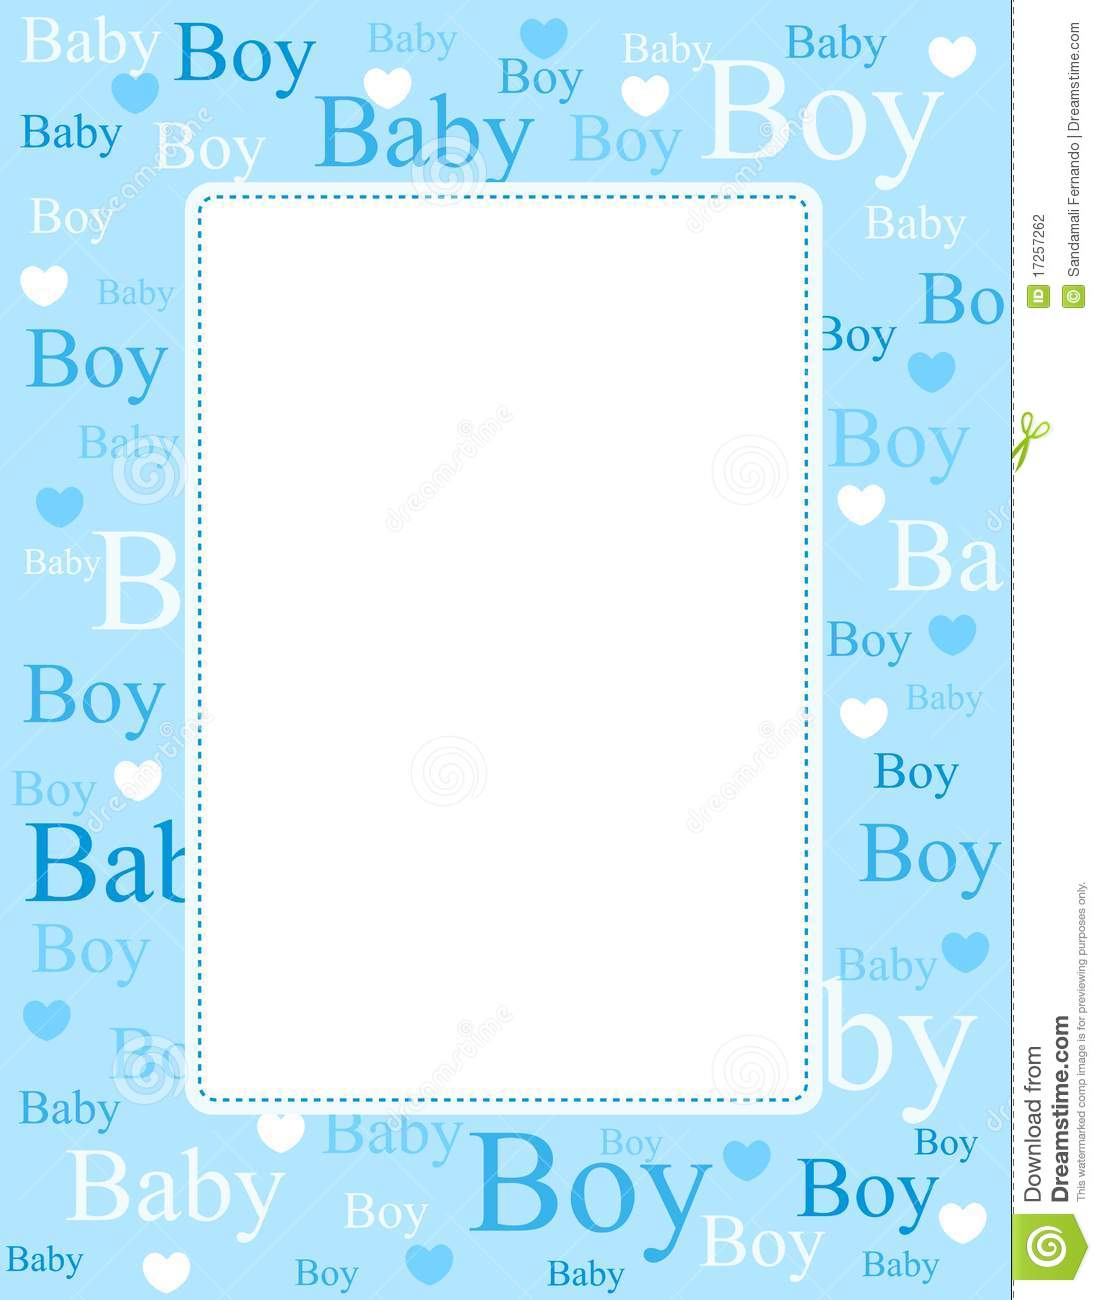 baby boy border clip art free - photo #44